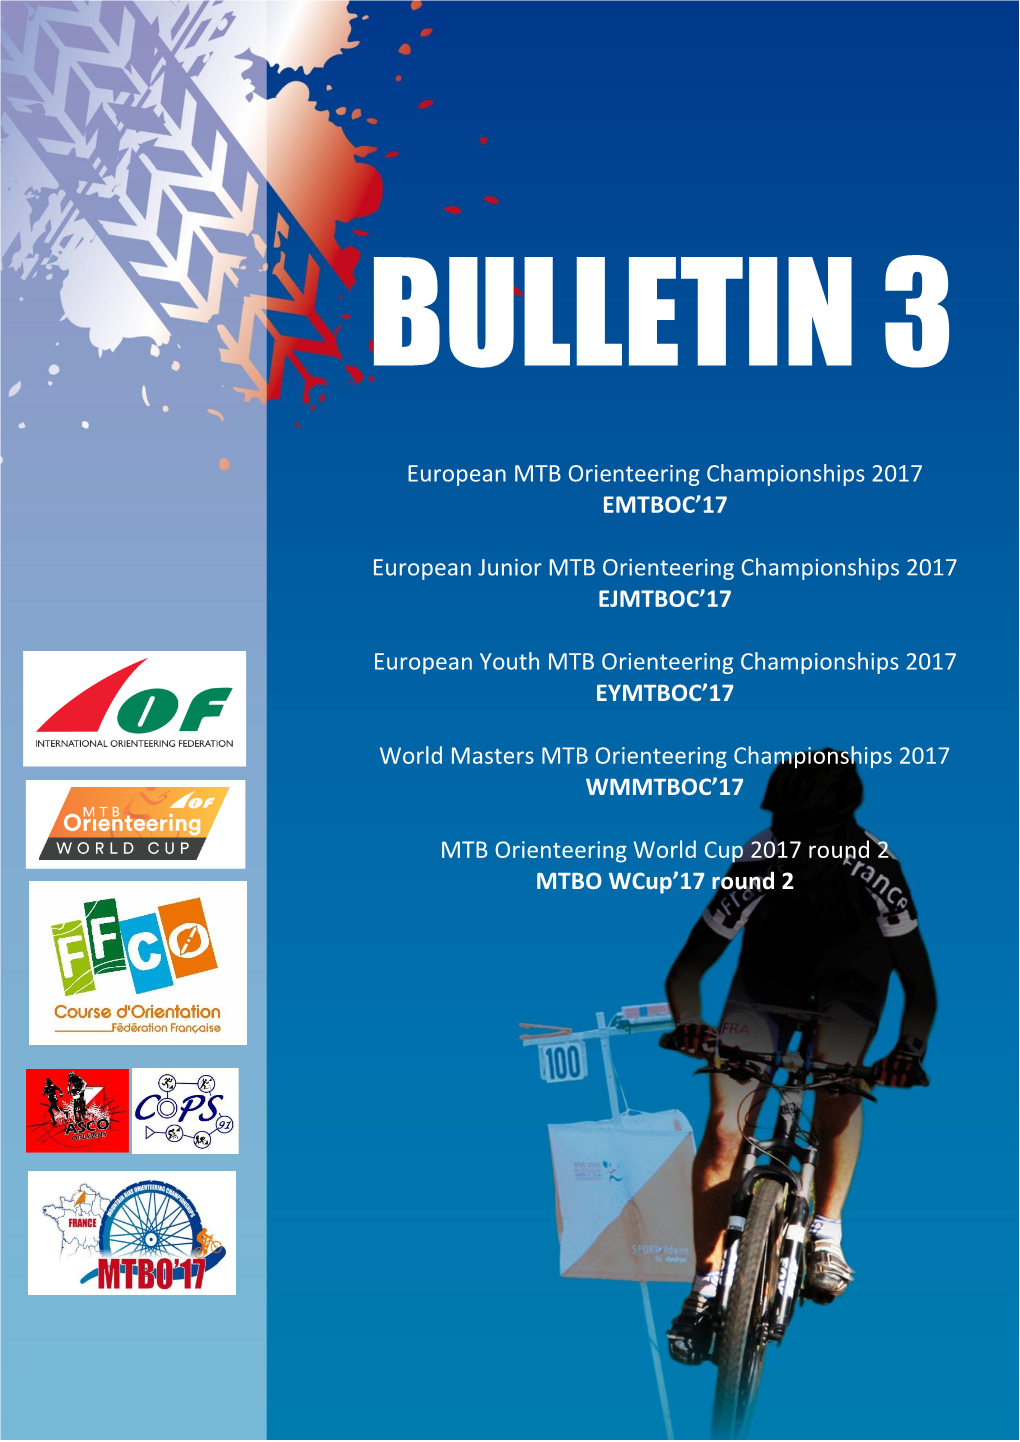 European MTB Orienteering Championships 2017 EMTBOC'17